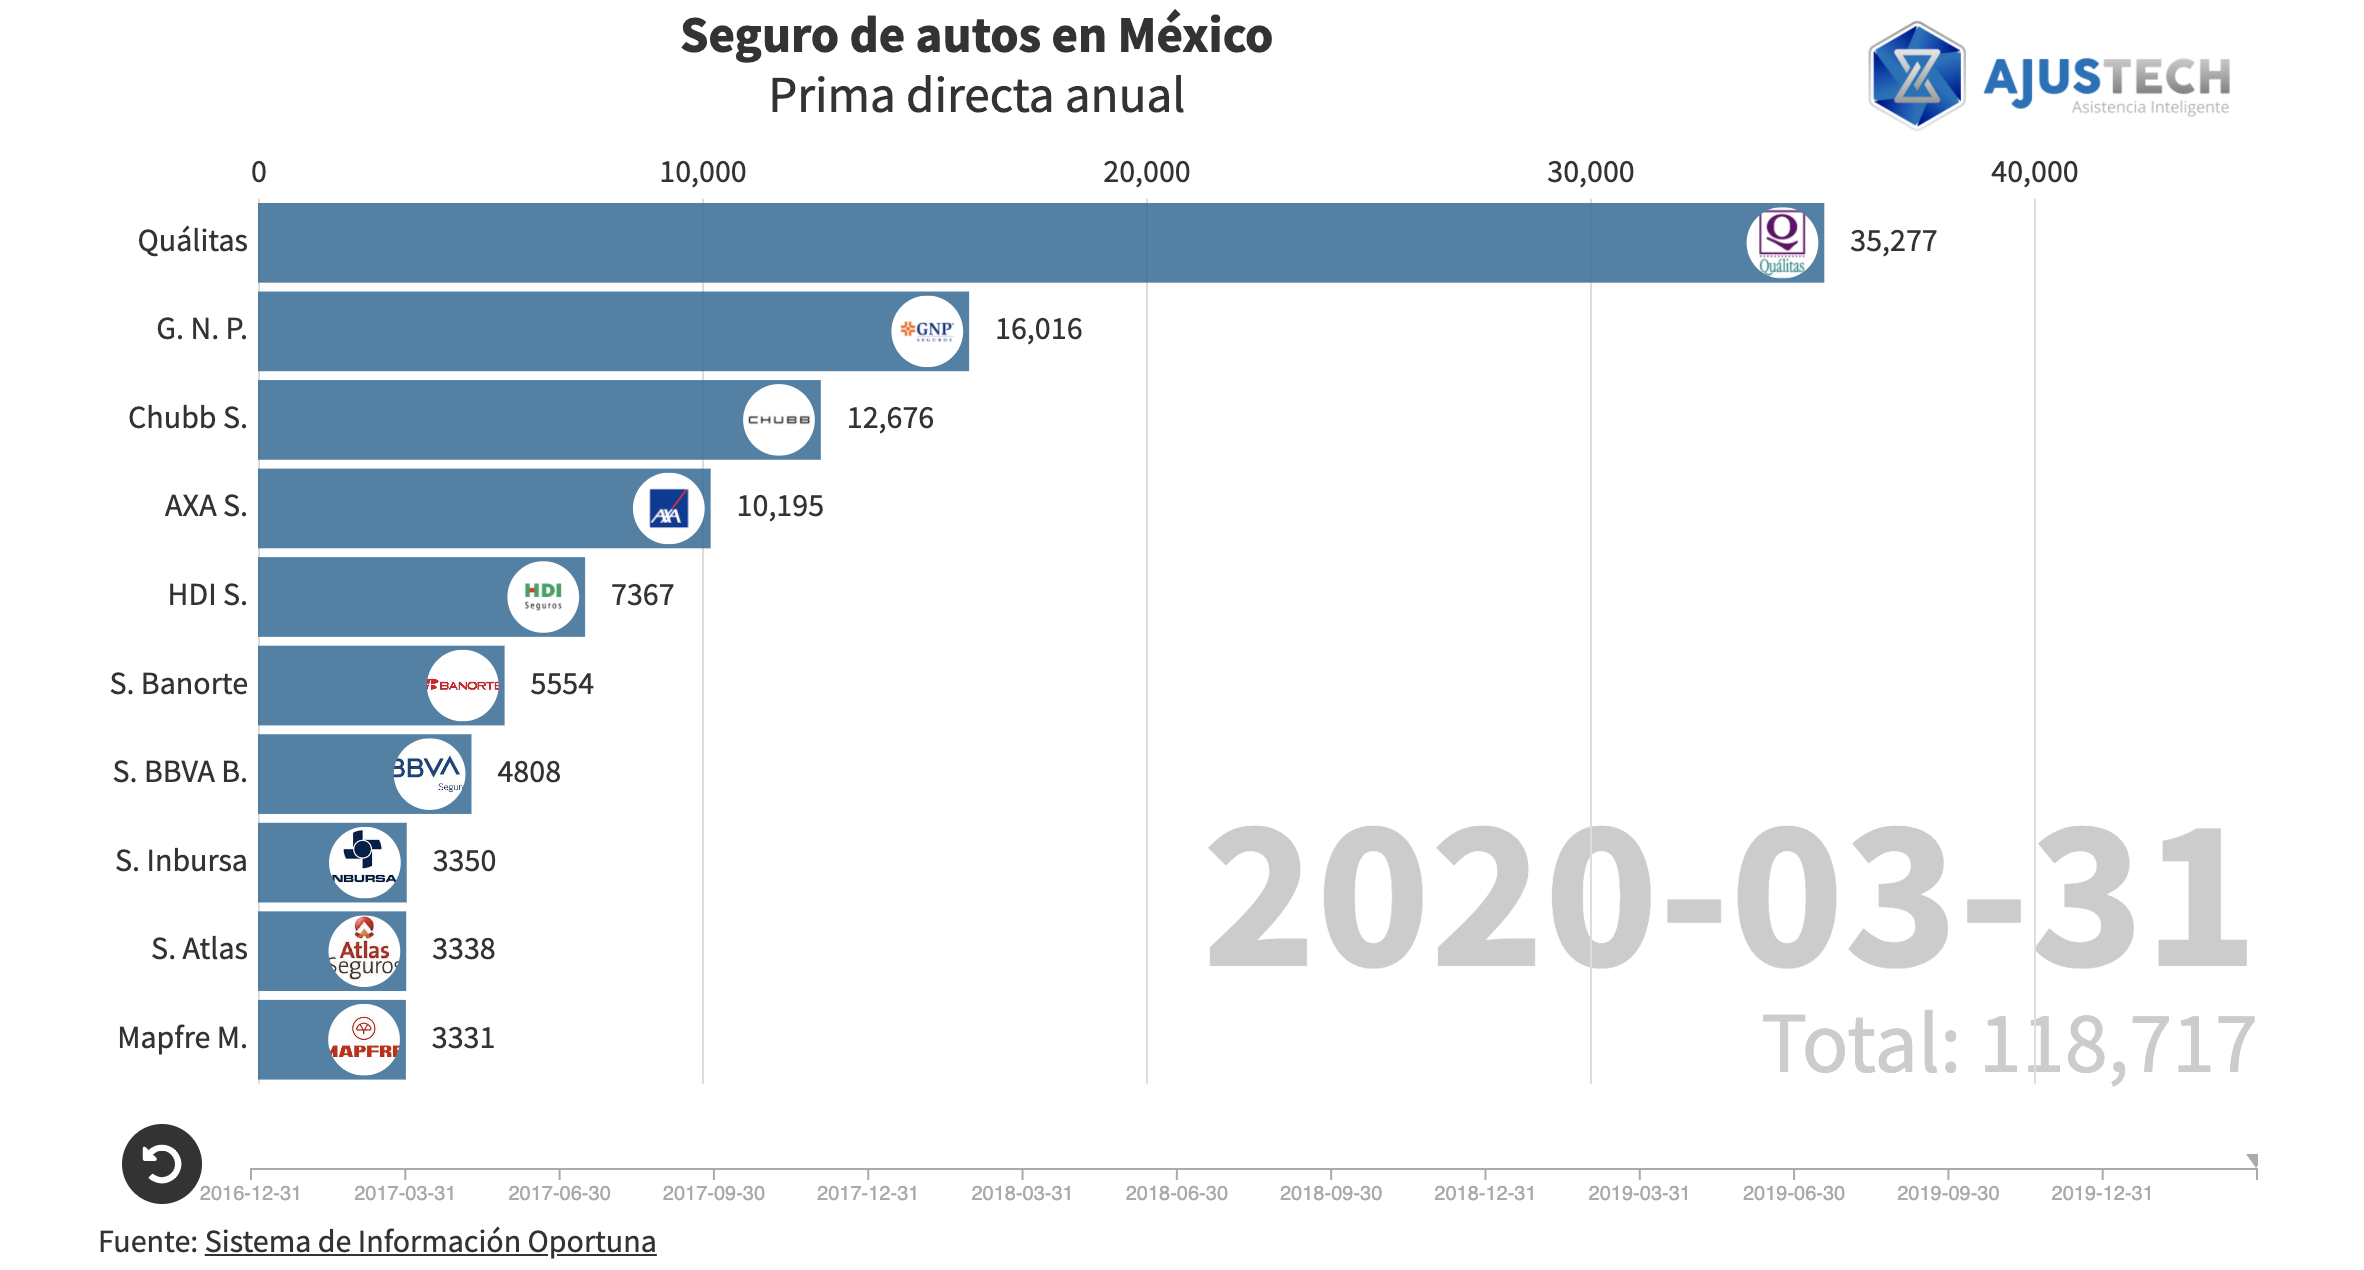 Evolución del seguro de autos en México